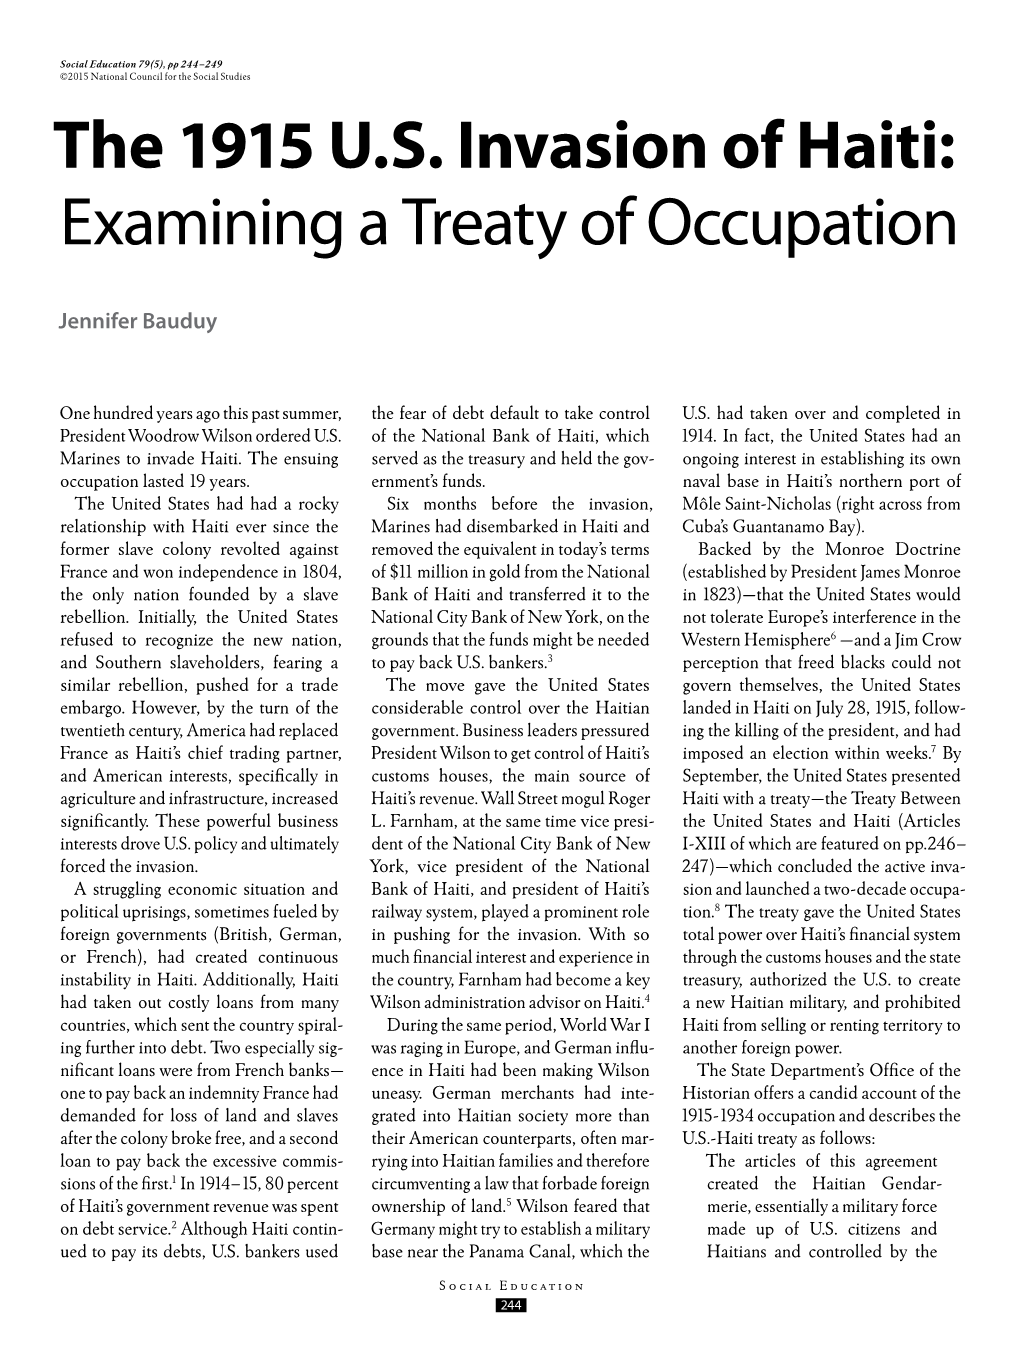 The 1915 U.S. Invasion of Haiti: Examining a Treaty of Occupation